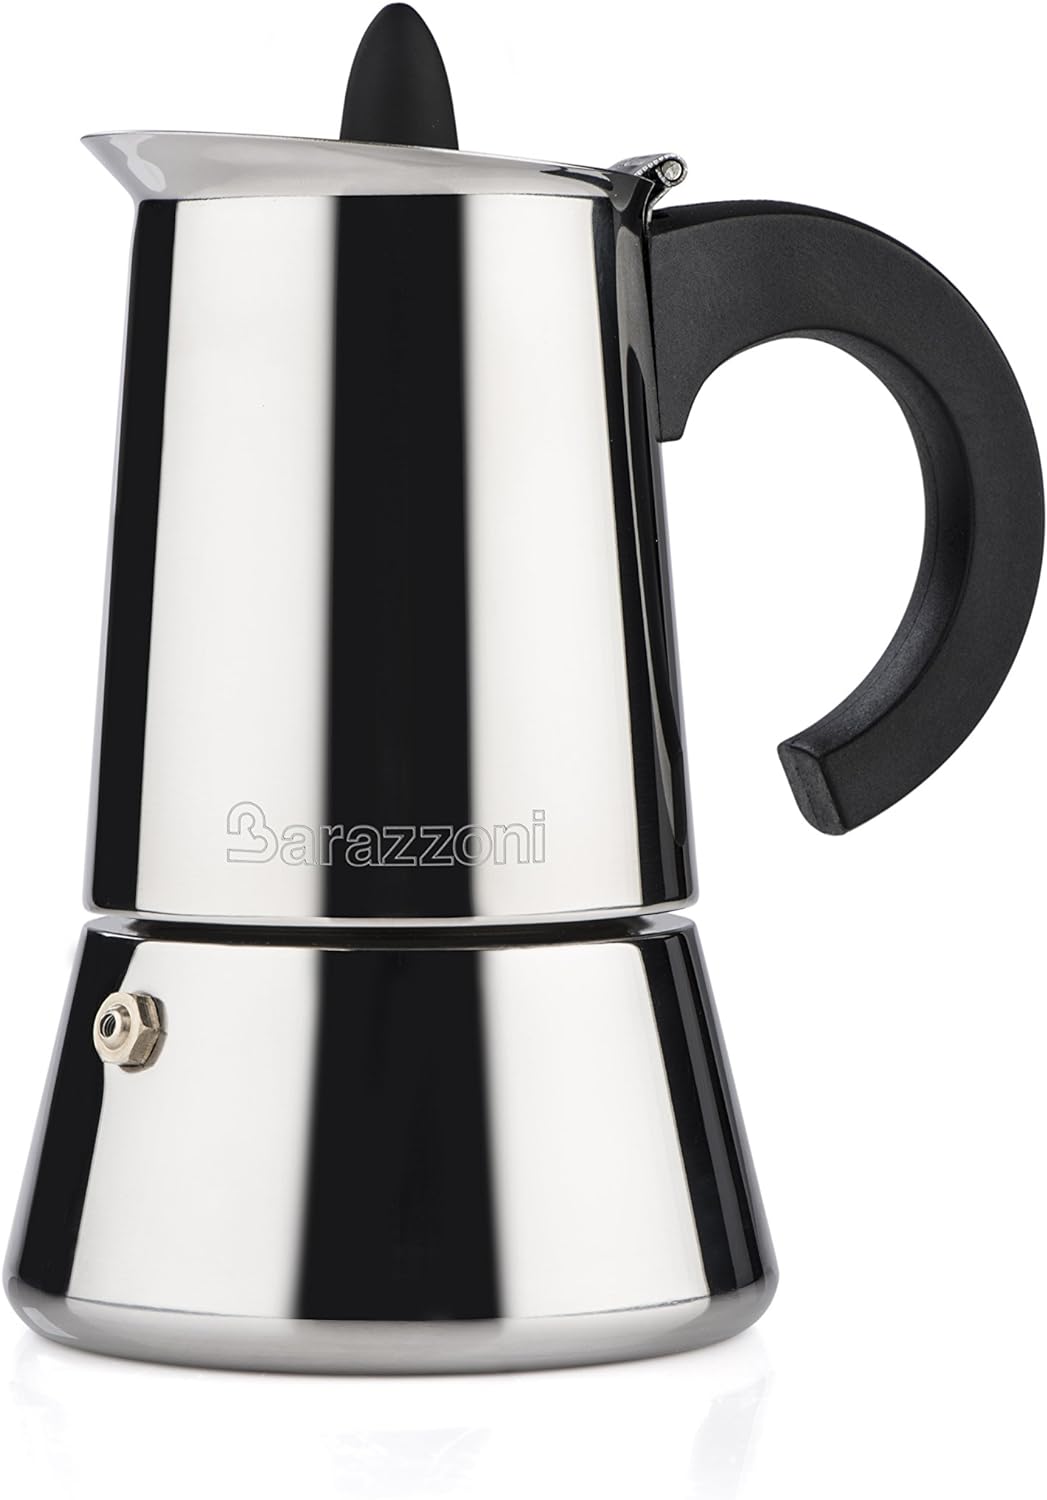 Barazzoni La Caffettiera Inox Espresso Maker, 4 Cups, Stainless Steel, Gray, 10 x 13.1 x 17.5 cm